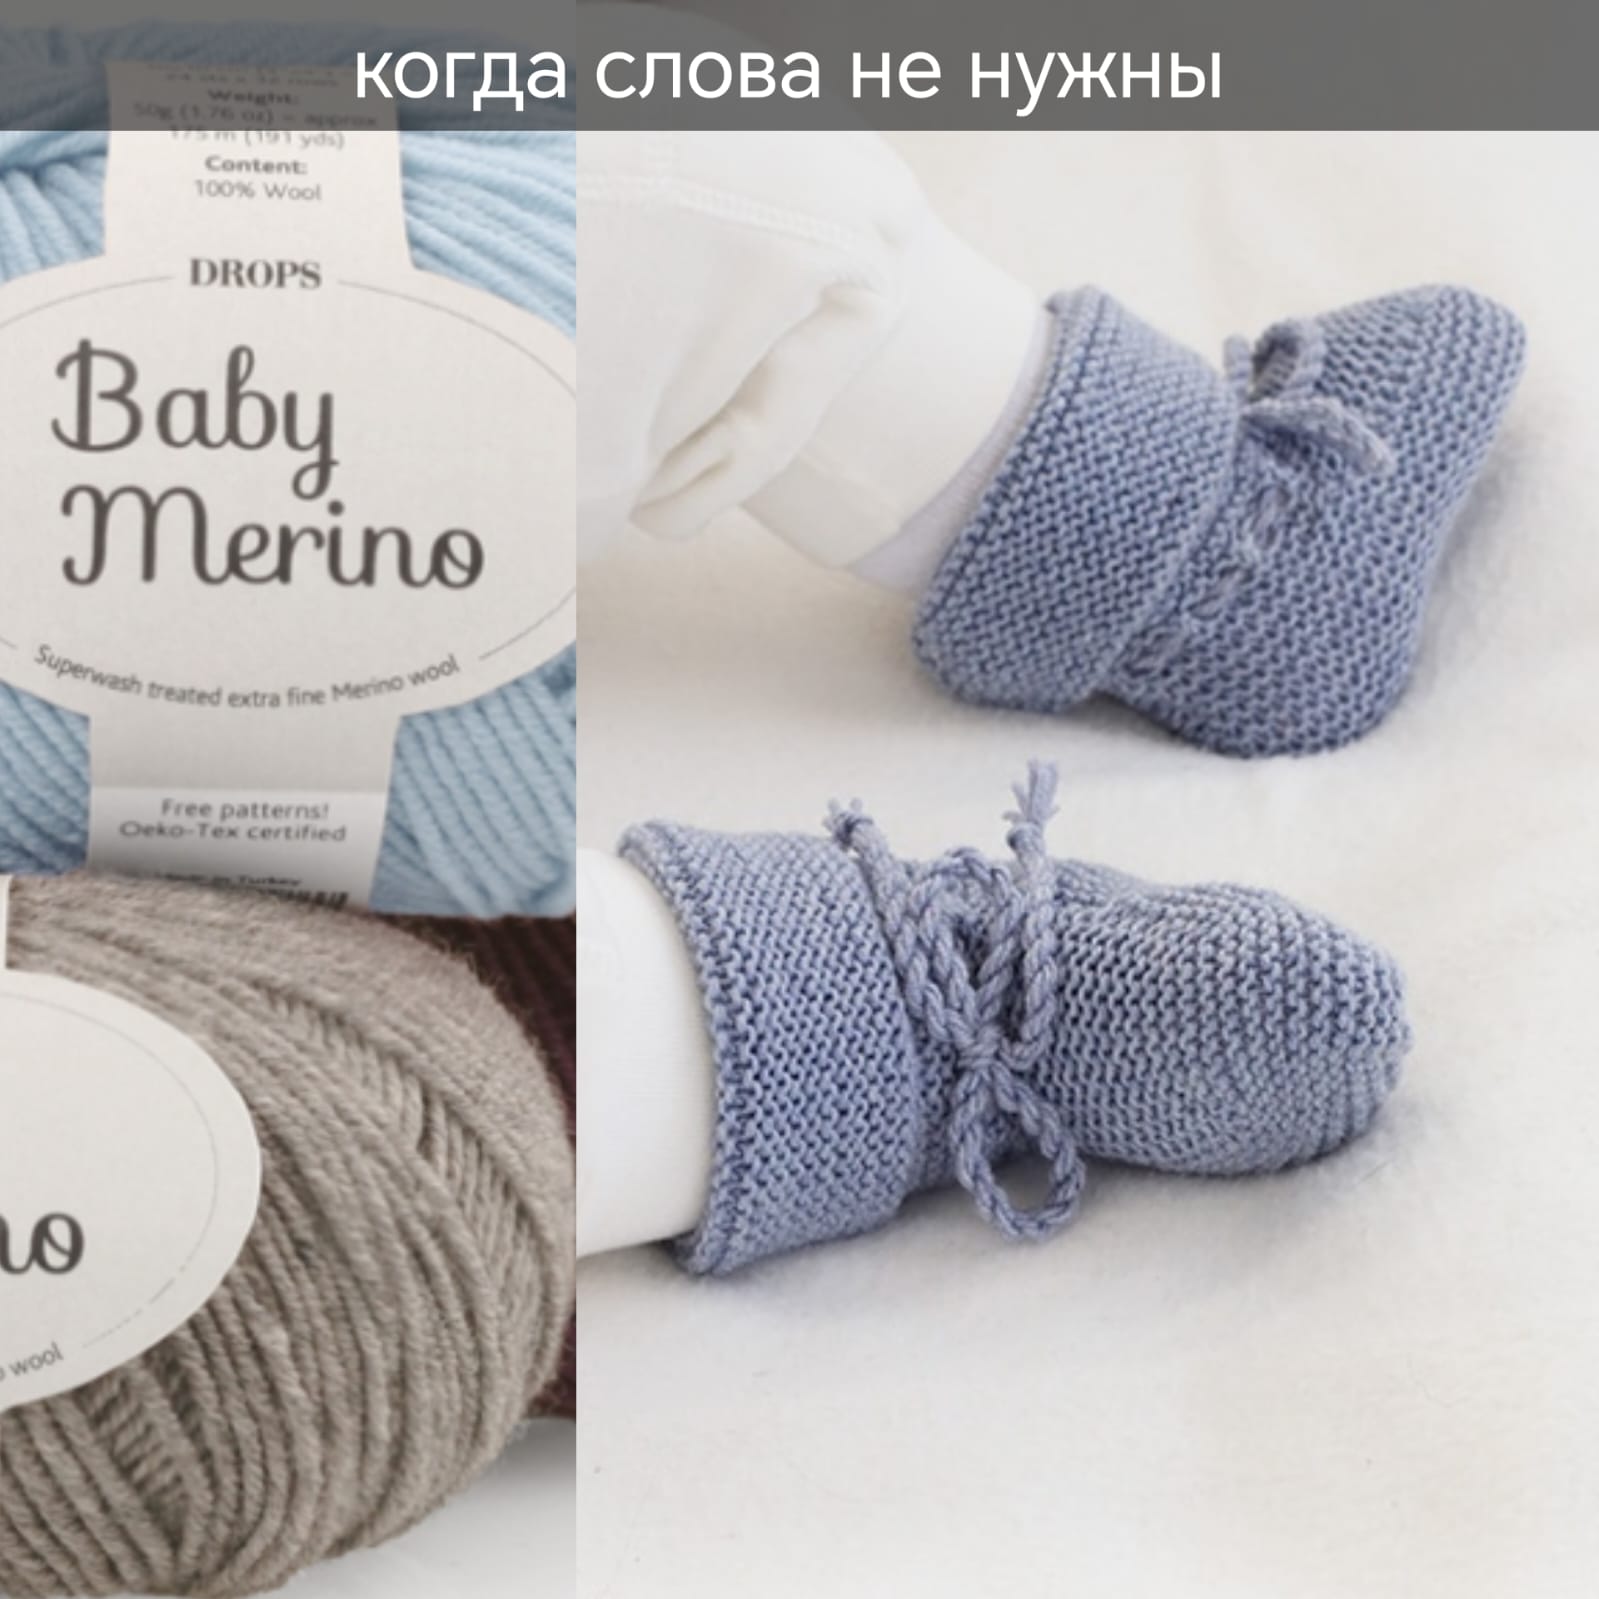 baby merino banner - Пряжа интернет магазин недорого Олин